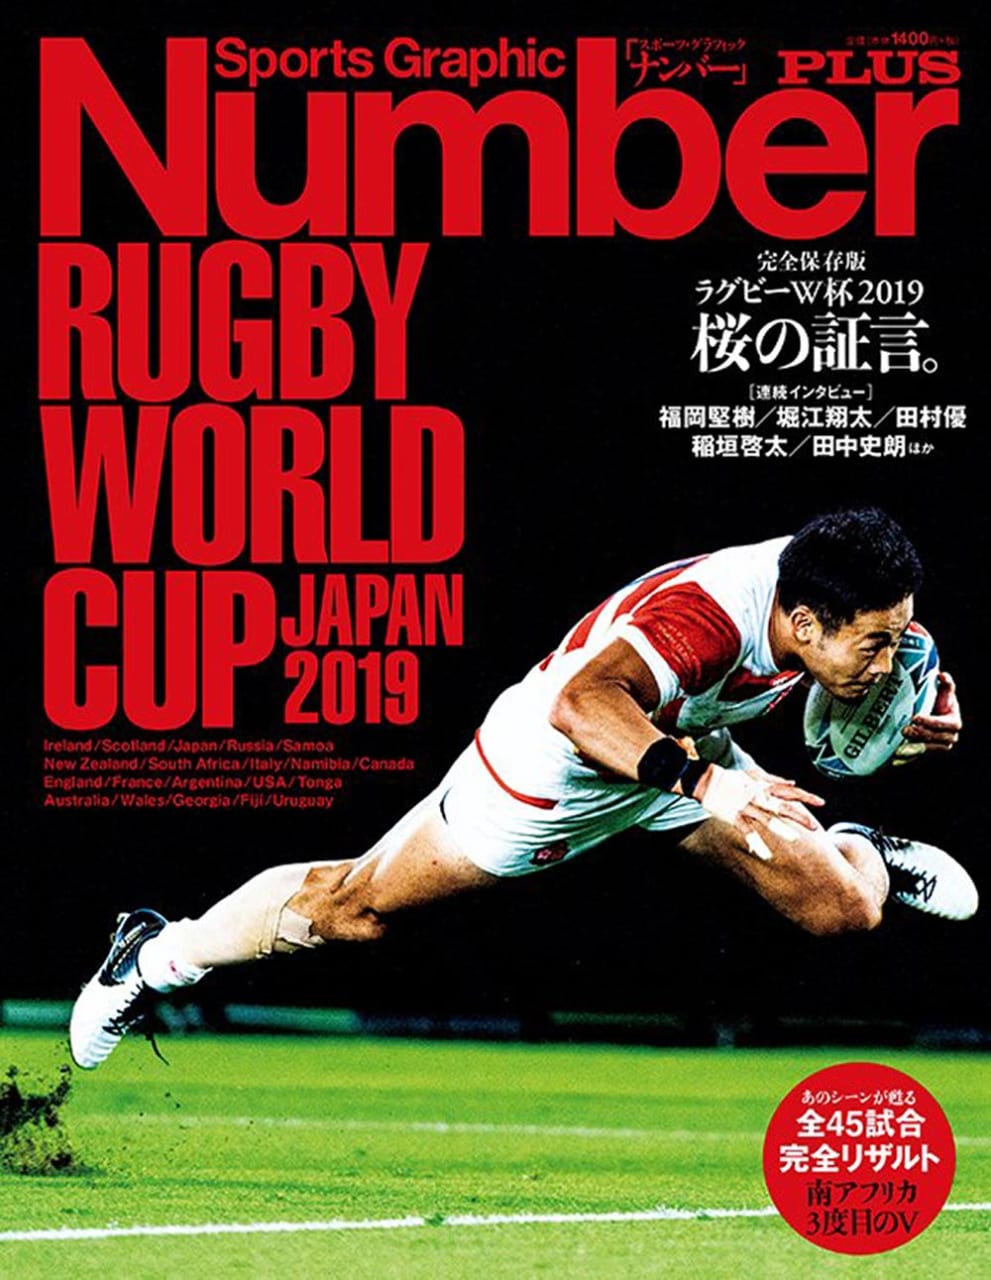 Sports Graphic Number PLUS December 2019
2019年11月9日発売
表紙撮影：近藤篤